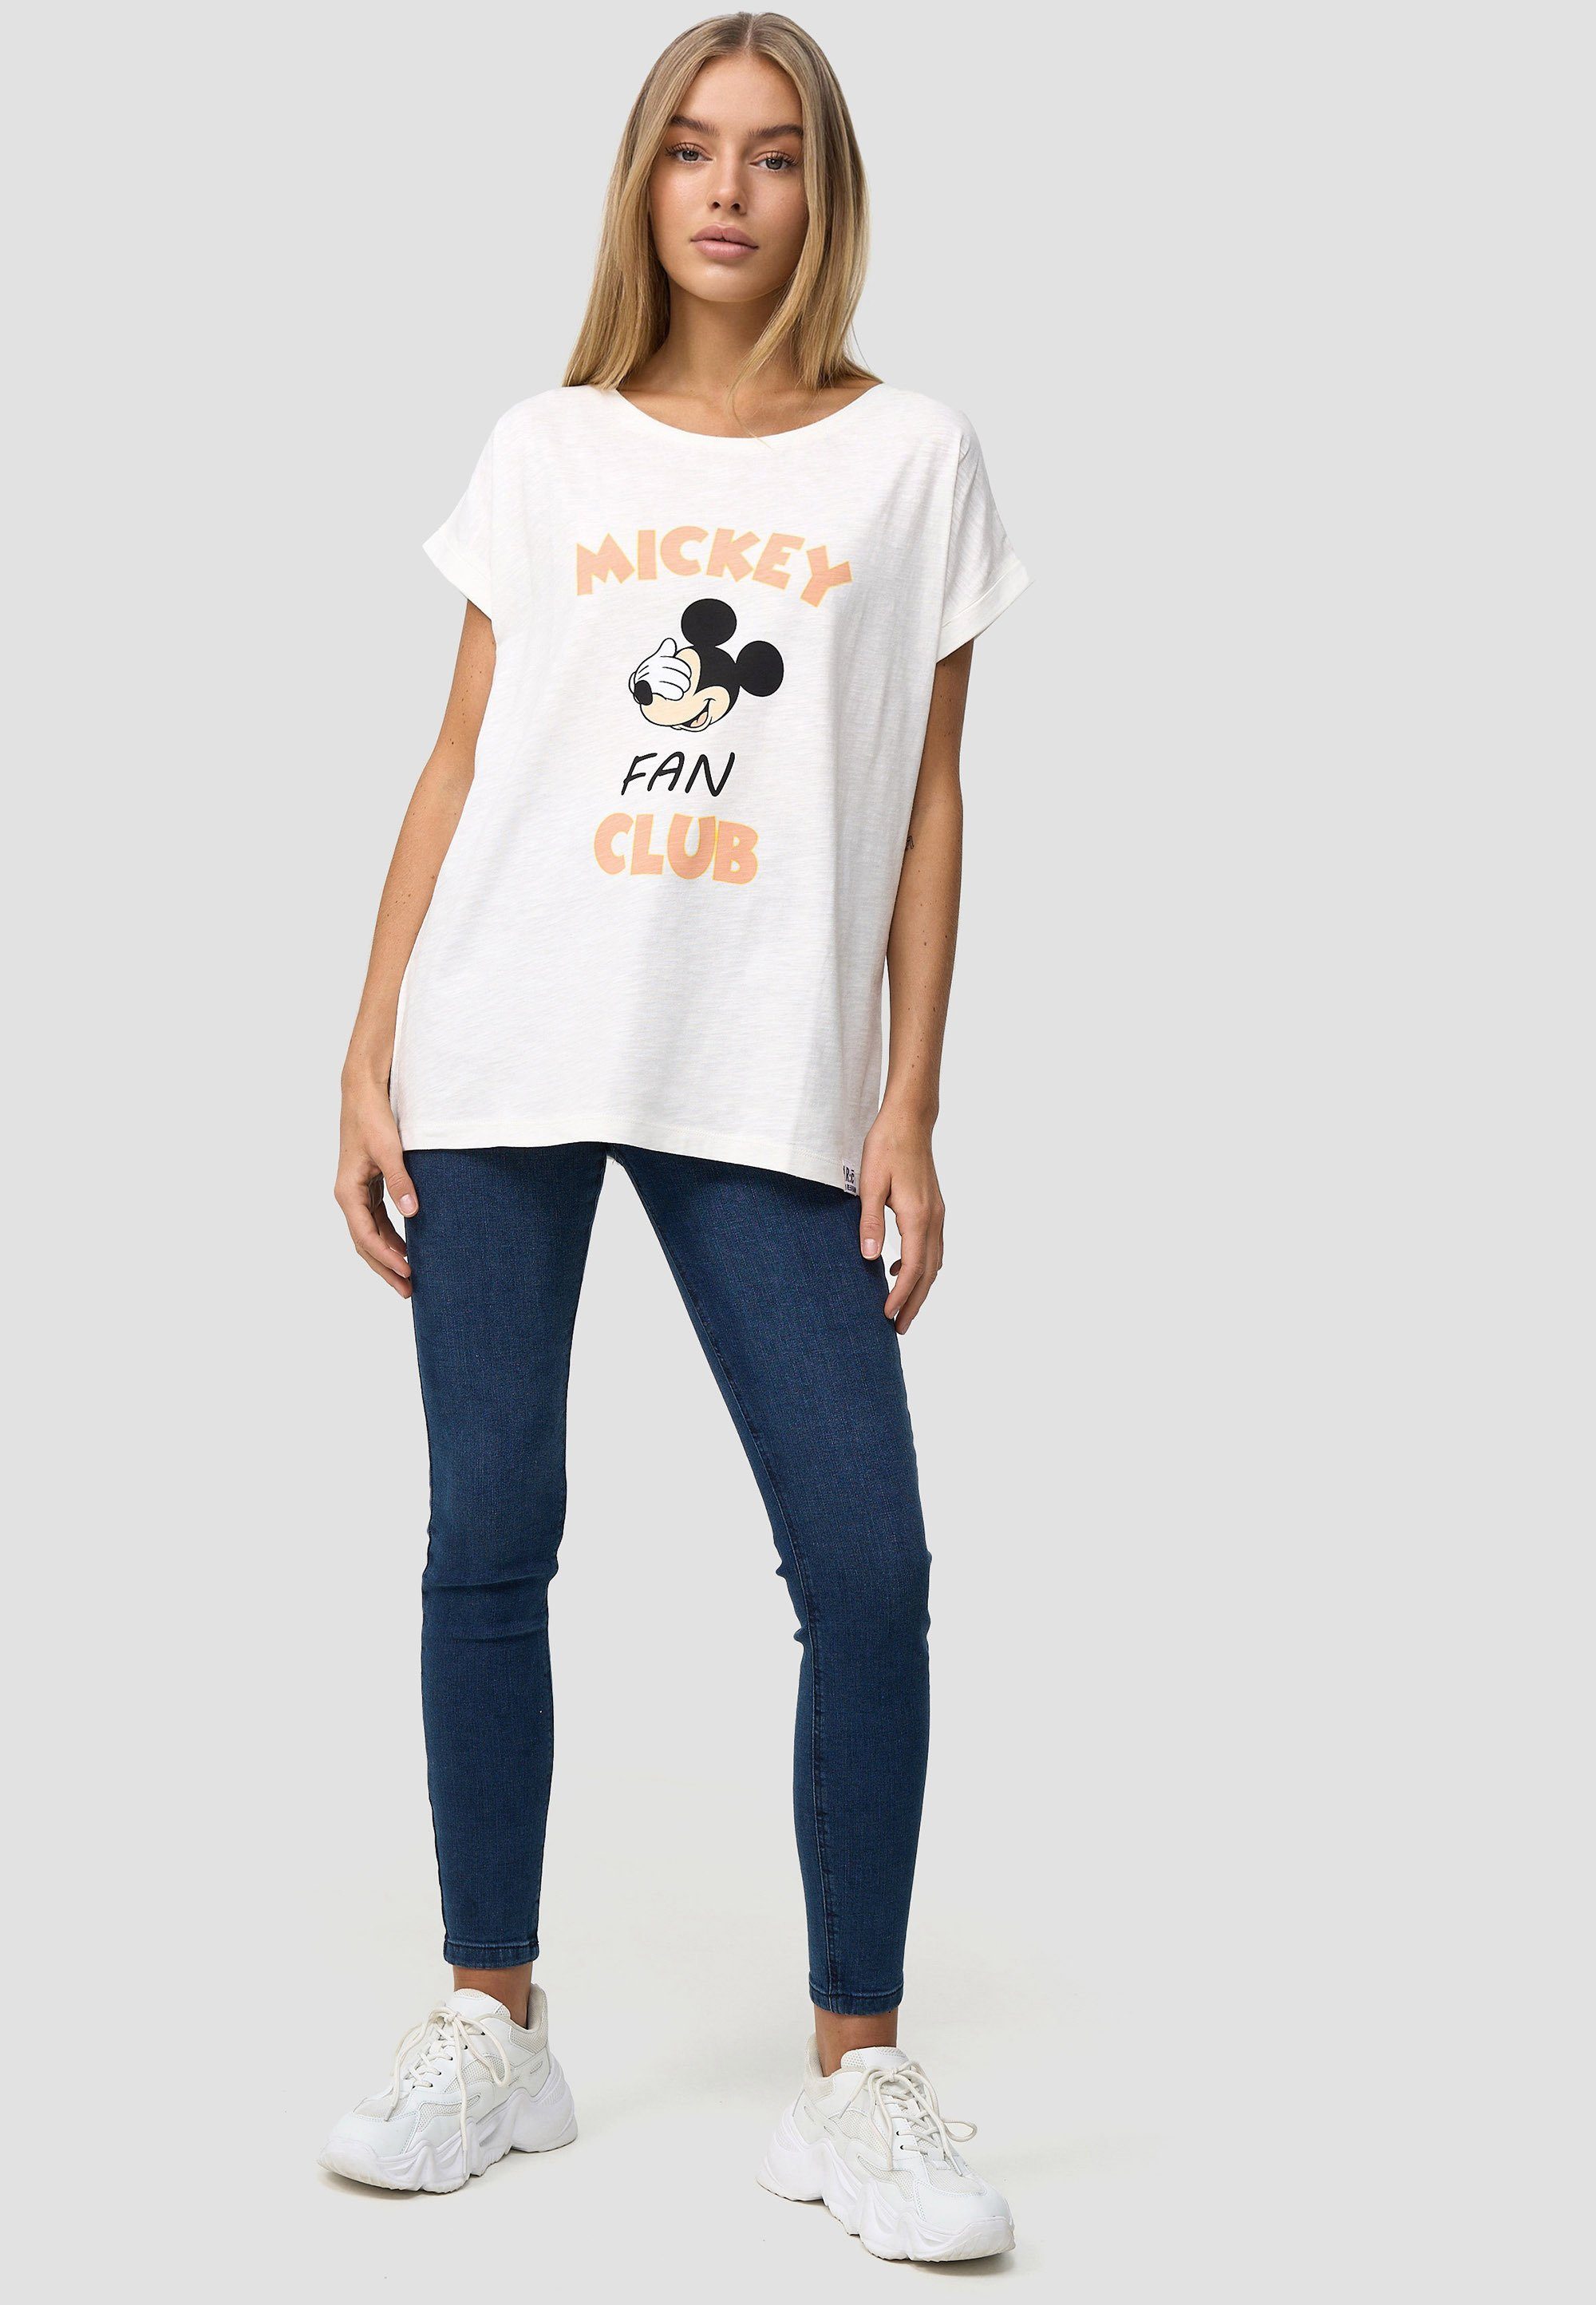 Mouse Club Mickey Bio-Baumwolle GOTS Fan zertifizierte Recovered T-Shirt